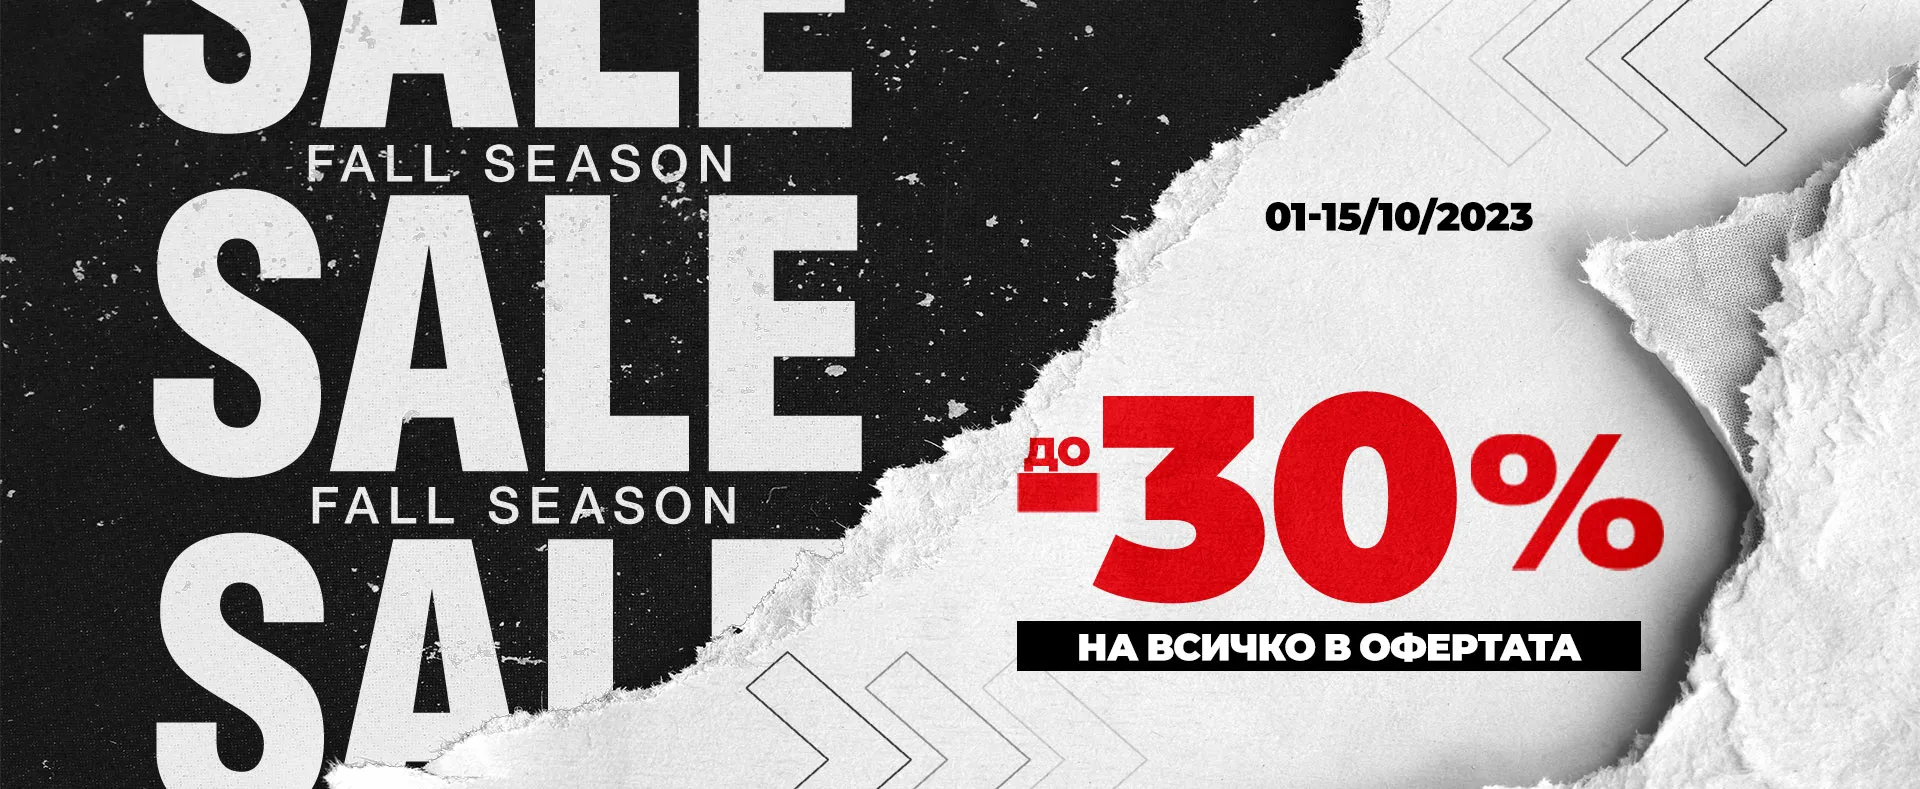 Mid season sale up to -30%